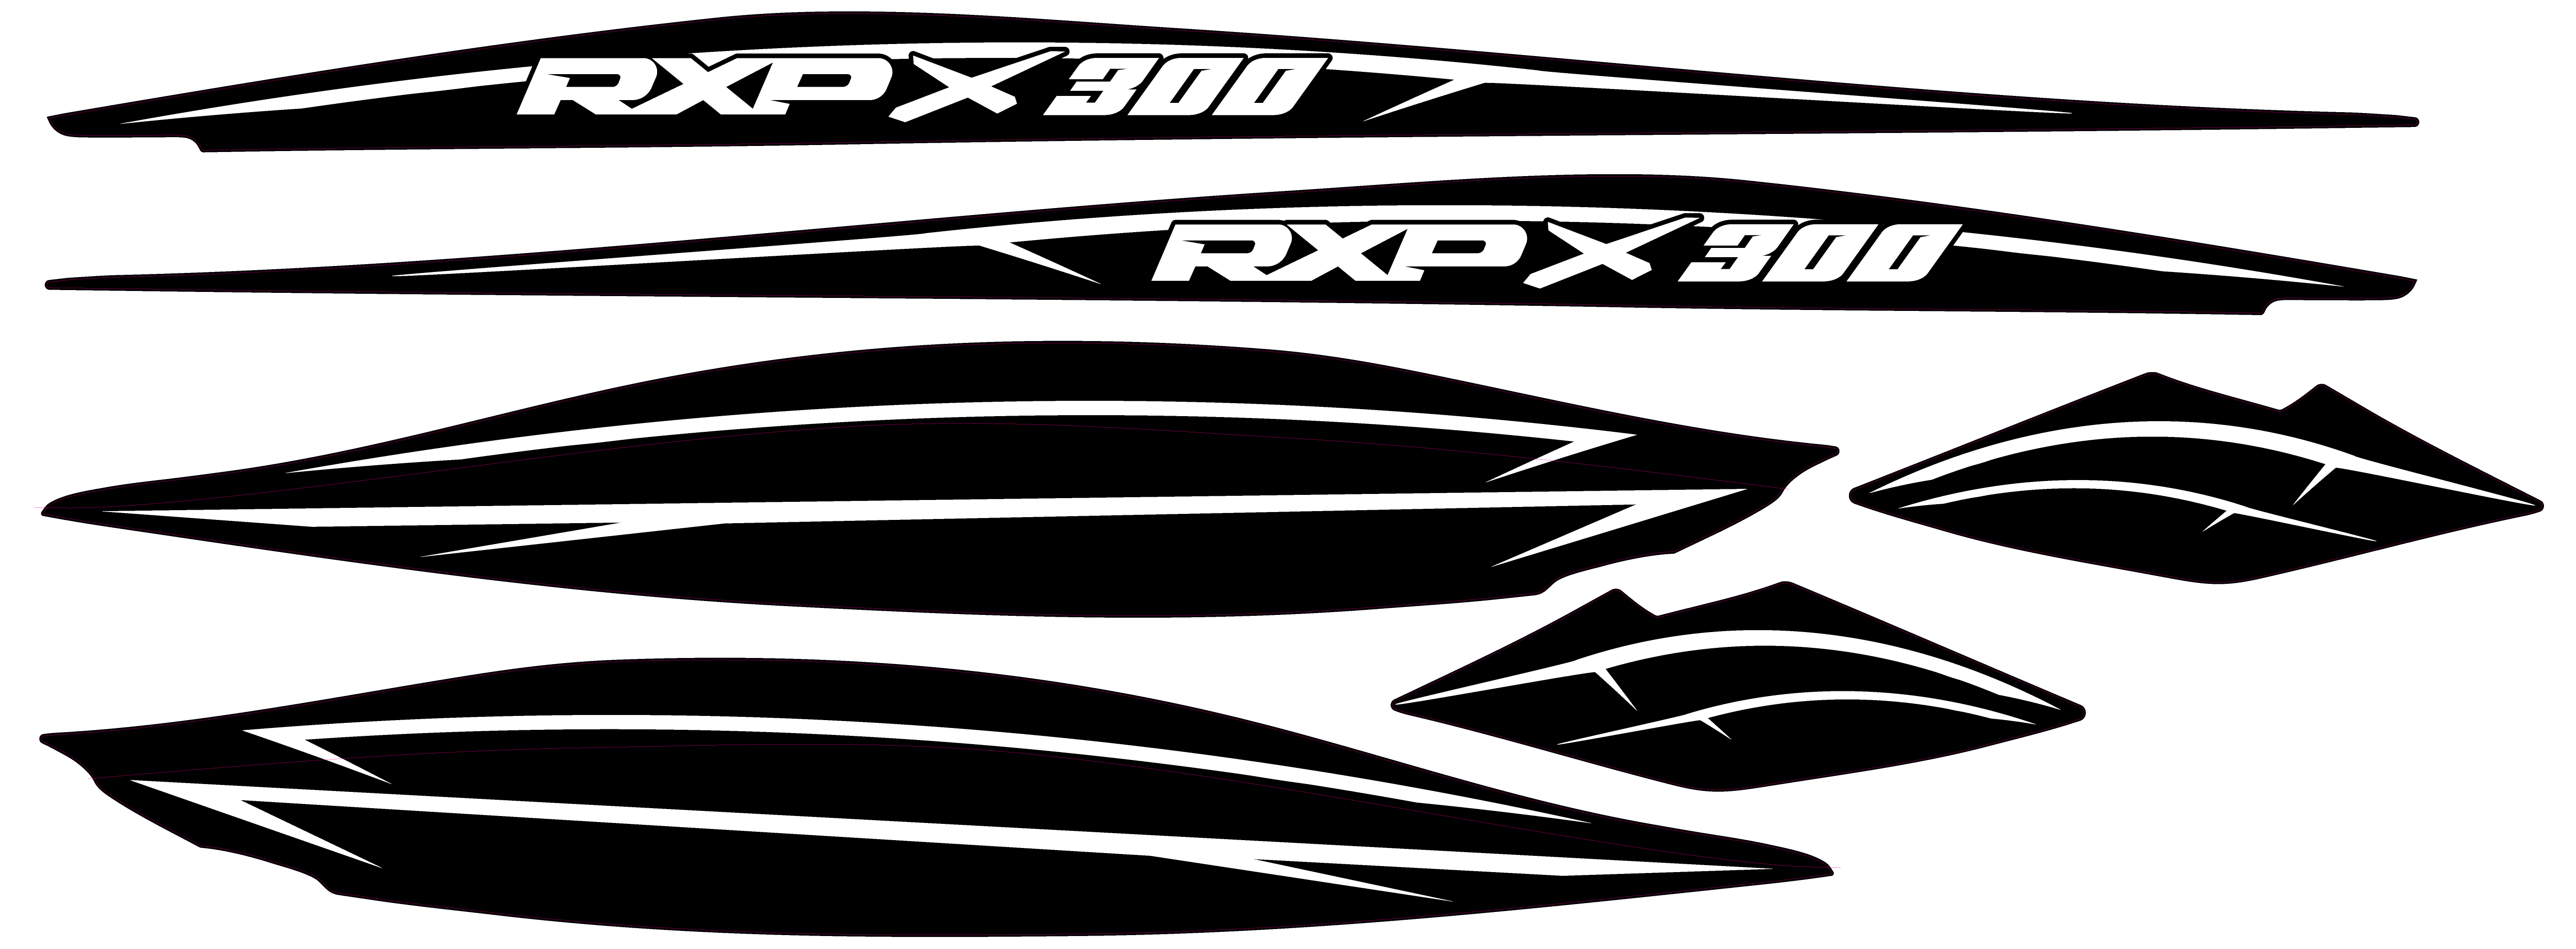 SEADOO RXPX 300 GRAPHICS